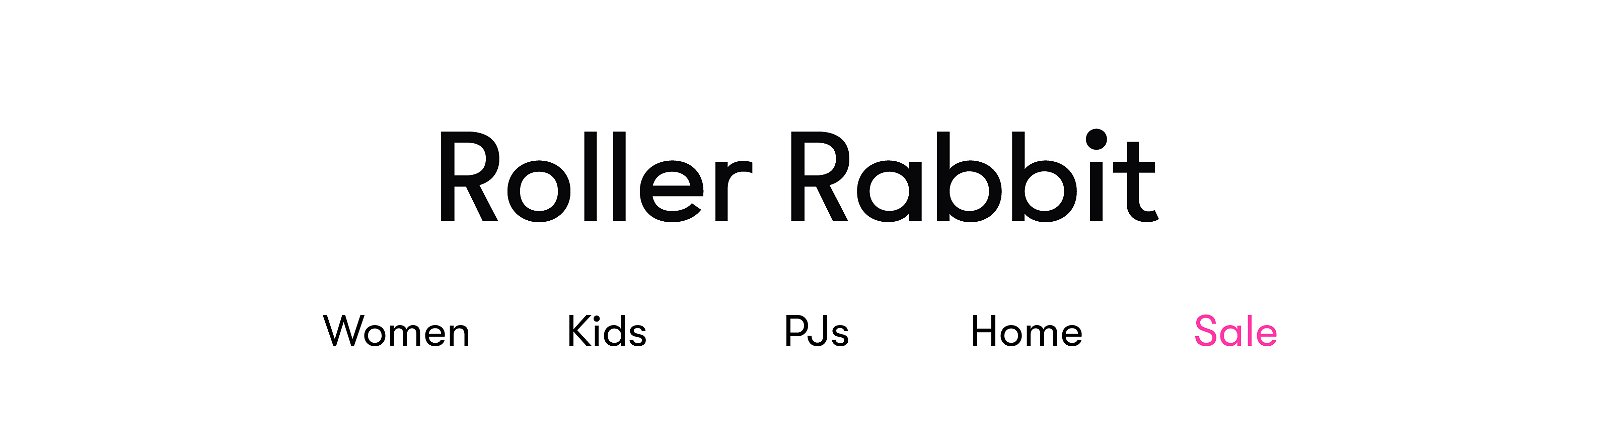 Roller Rabbit I Your Mask Everyone You Ll See Milled,Bathroom Sink Backsplashes